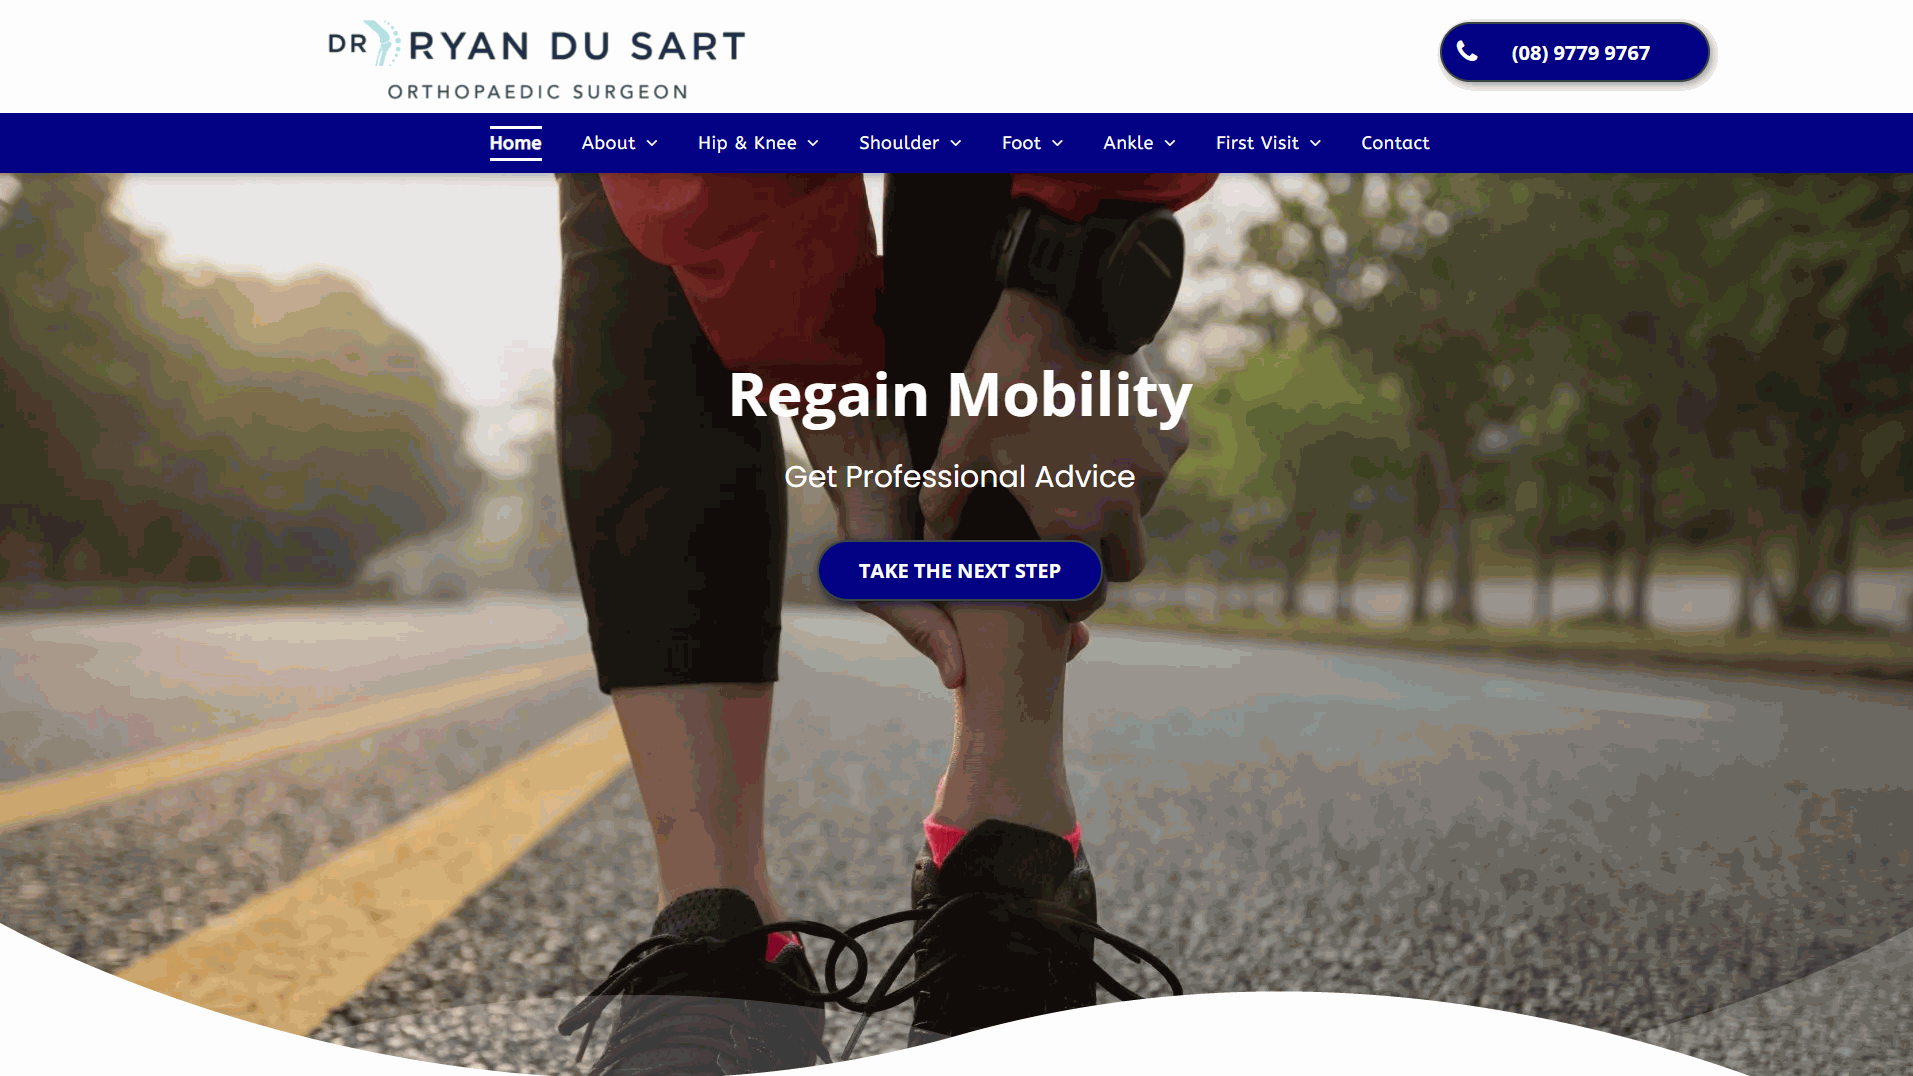 Dr Ryan du Sart, Orthopaedic Surgeon Website Design